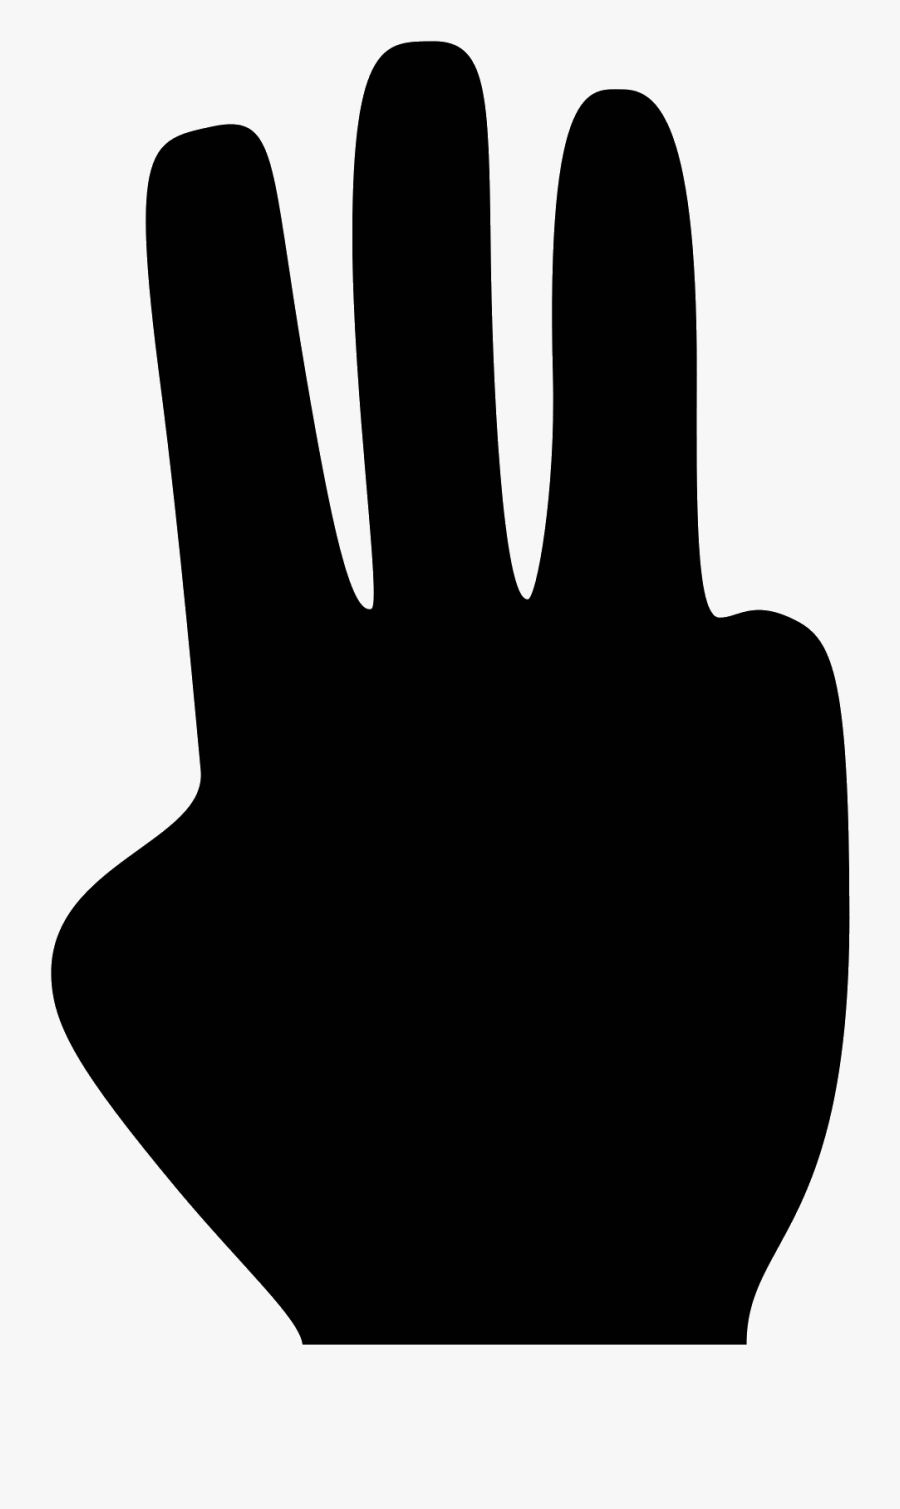 2 Finger Png - Icon, Transparent Clipart